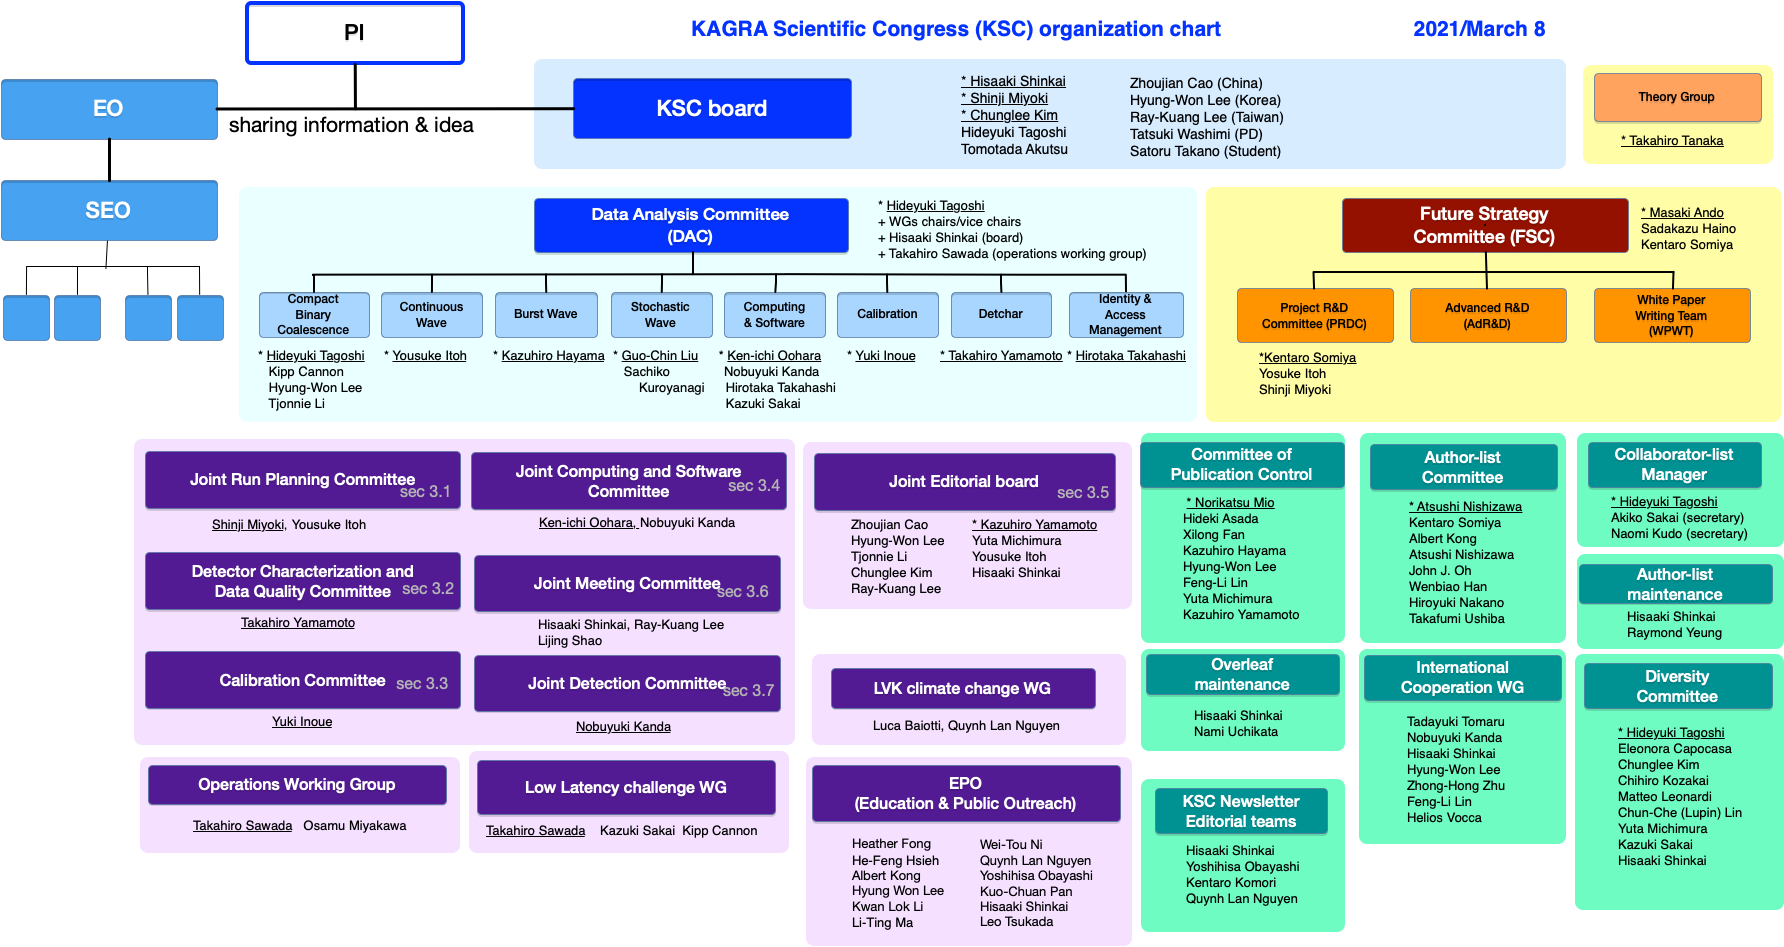 KSC organization chart (2021/March 08)